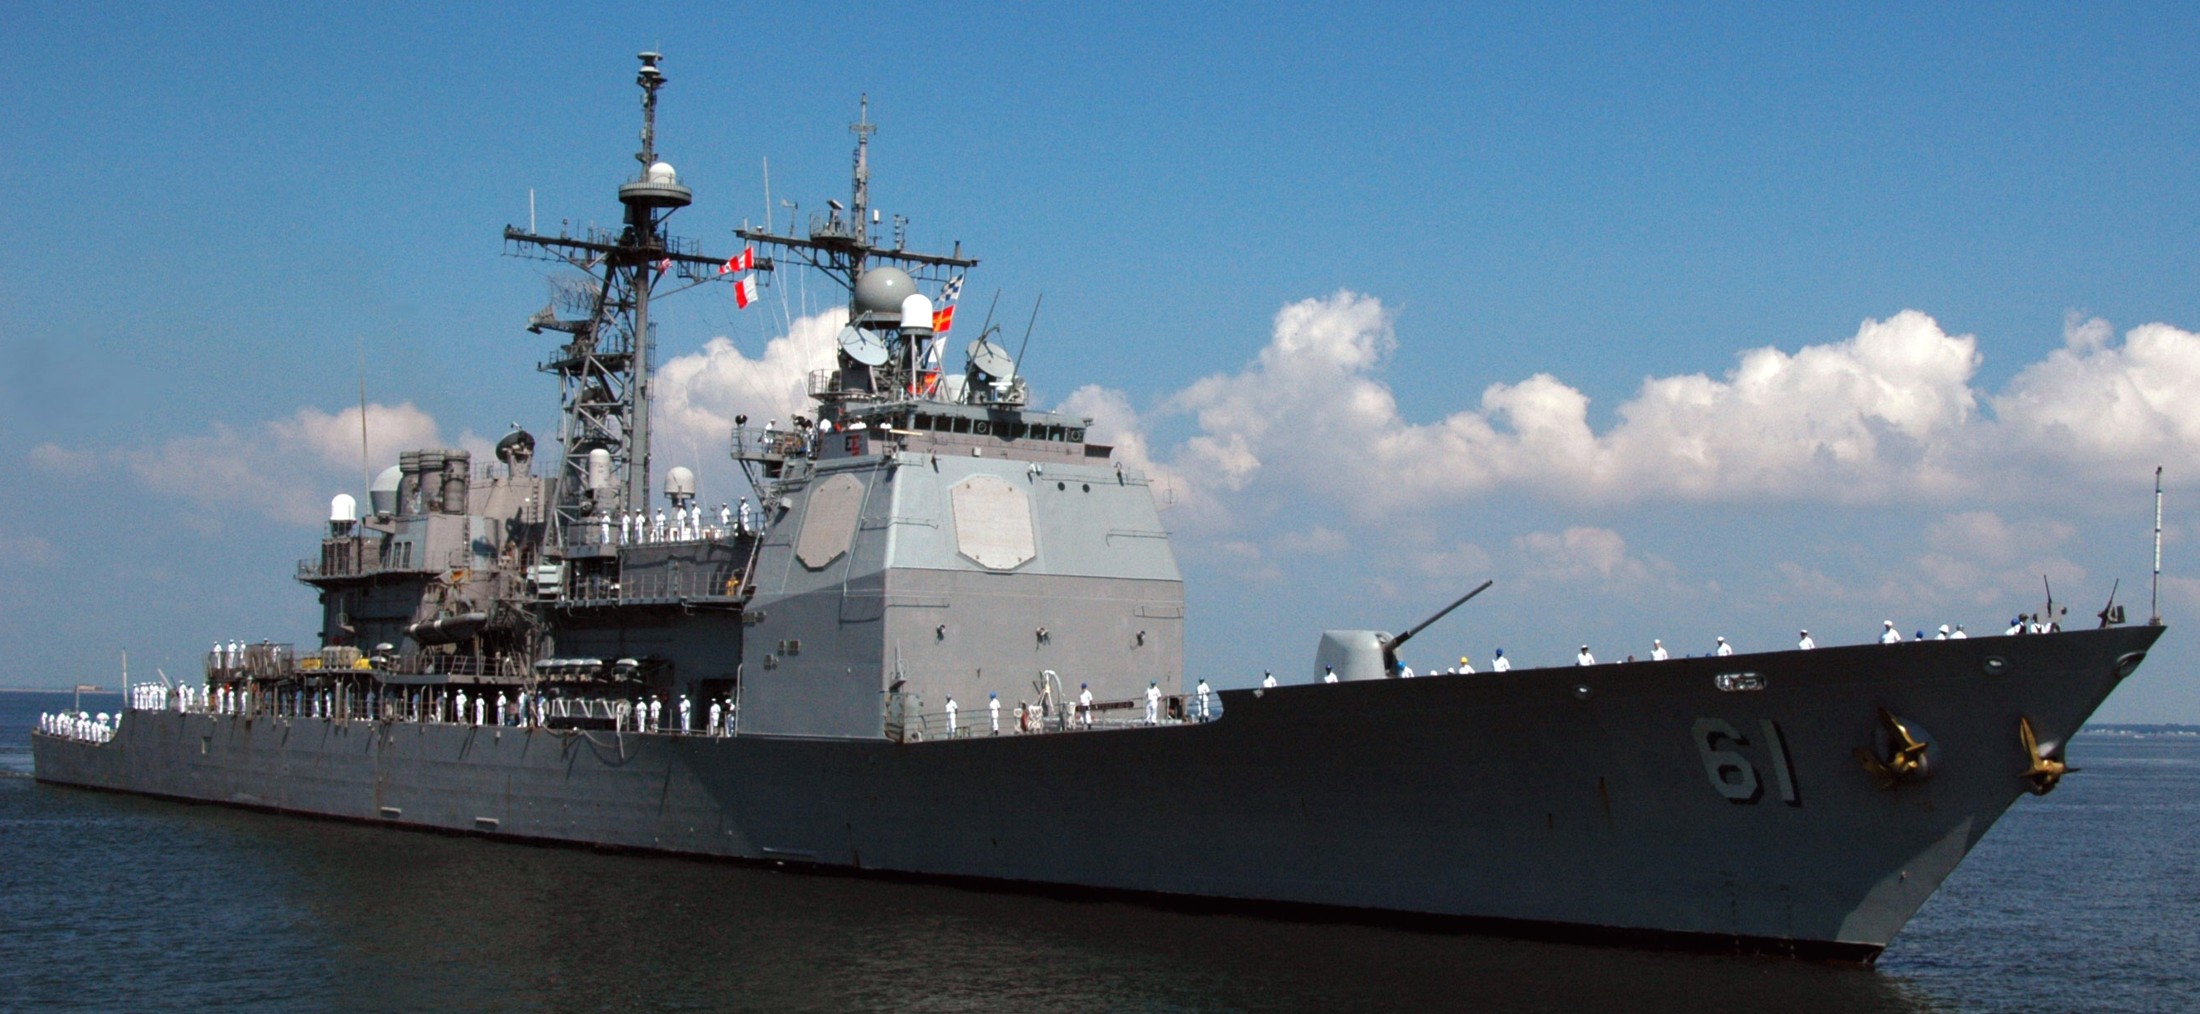 cg-61 uss monterey ticonderoga class guided missile cruiser aegis us navy 18